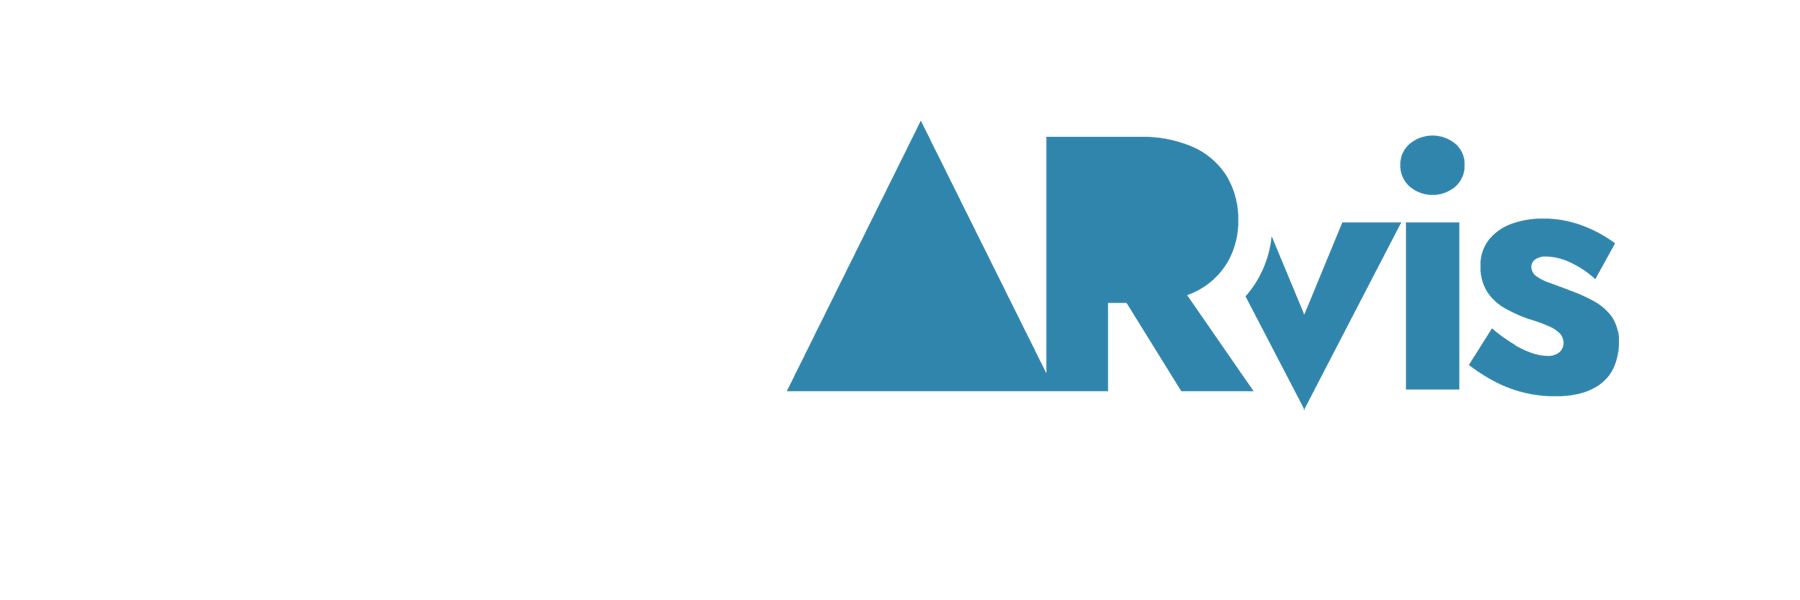 digital security lab